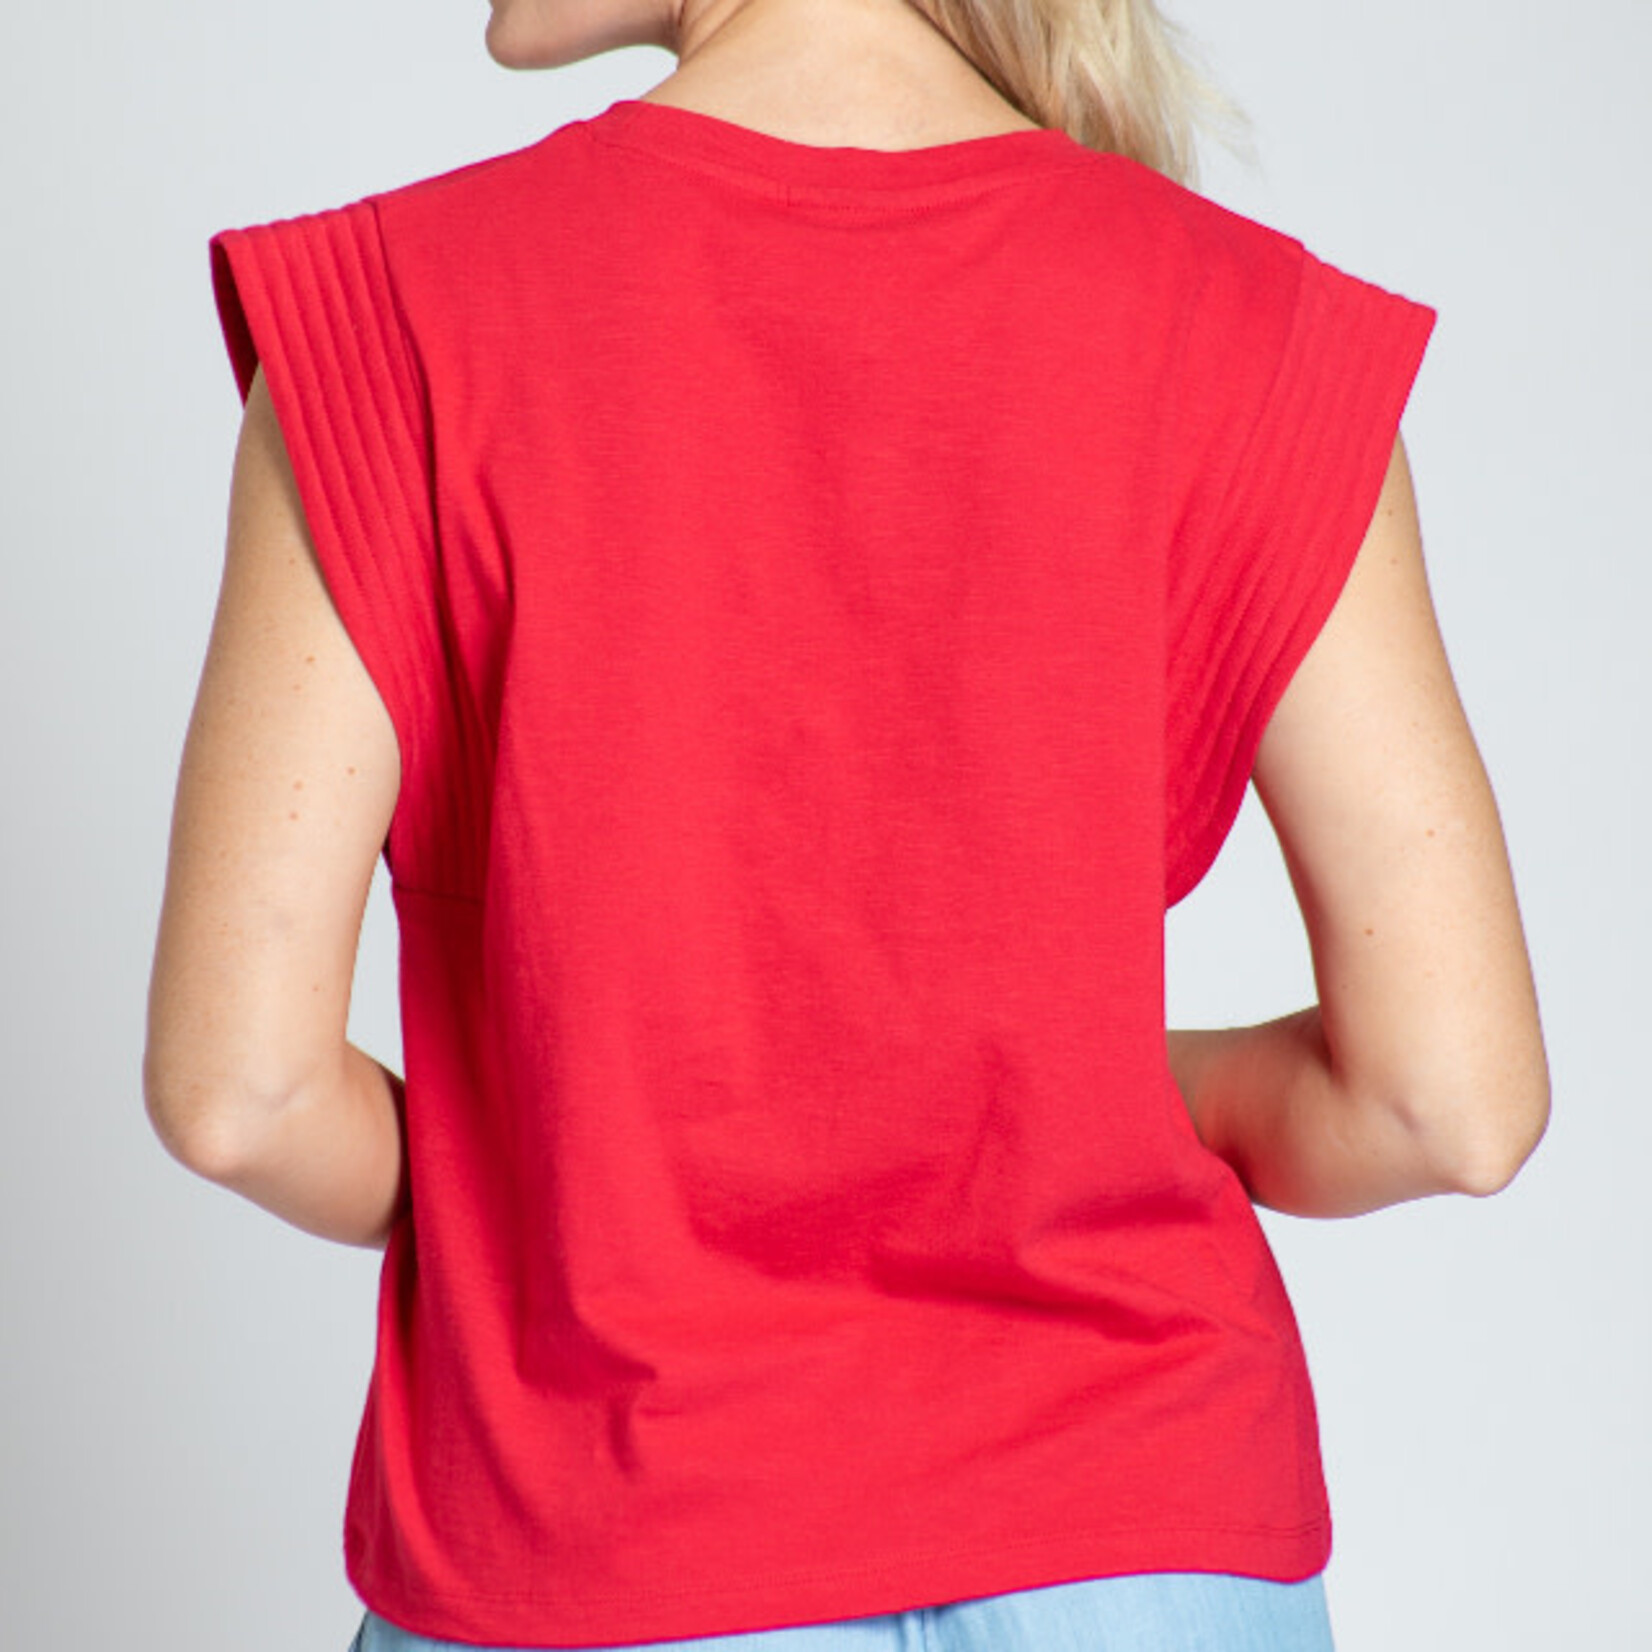 APNY Cotton Red Sleeveless Utility Shirt